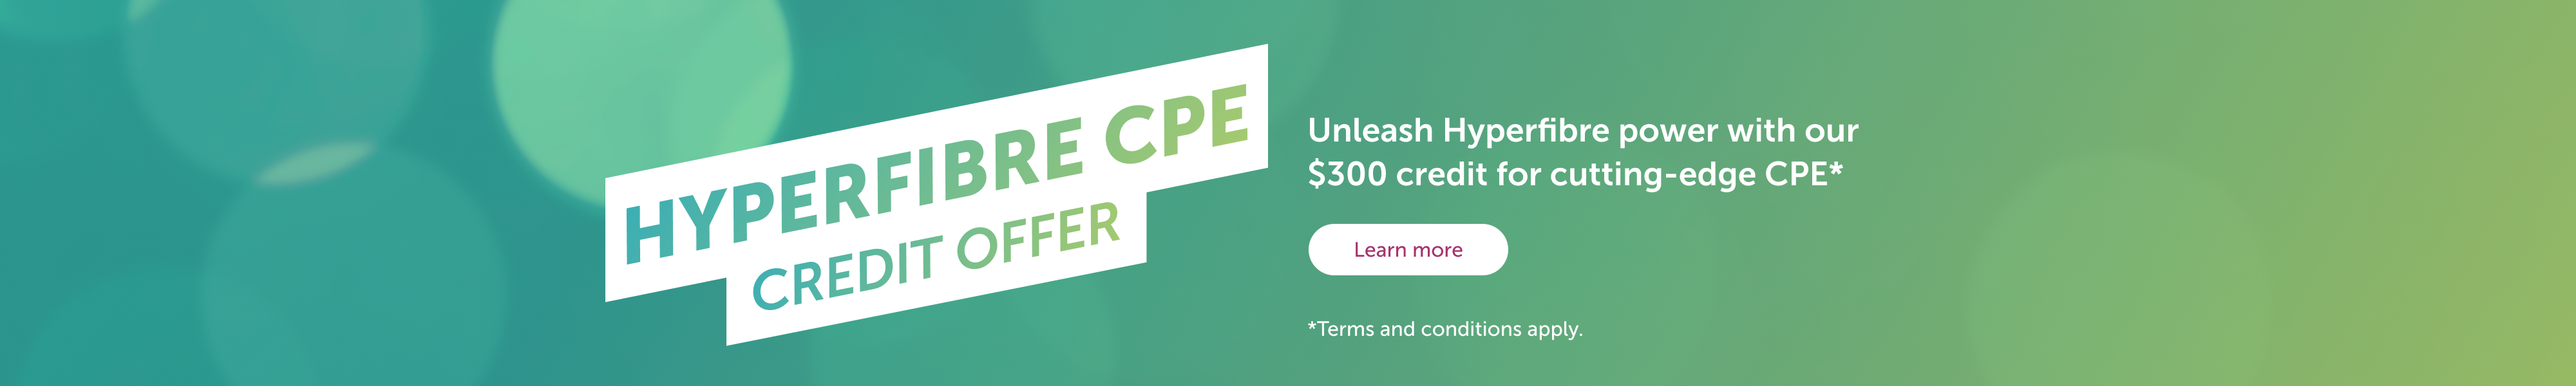 Hyperfibre CPE banner